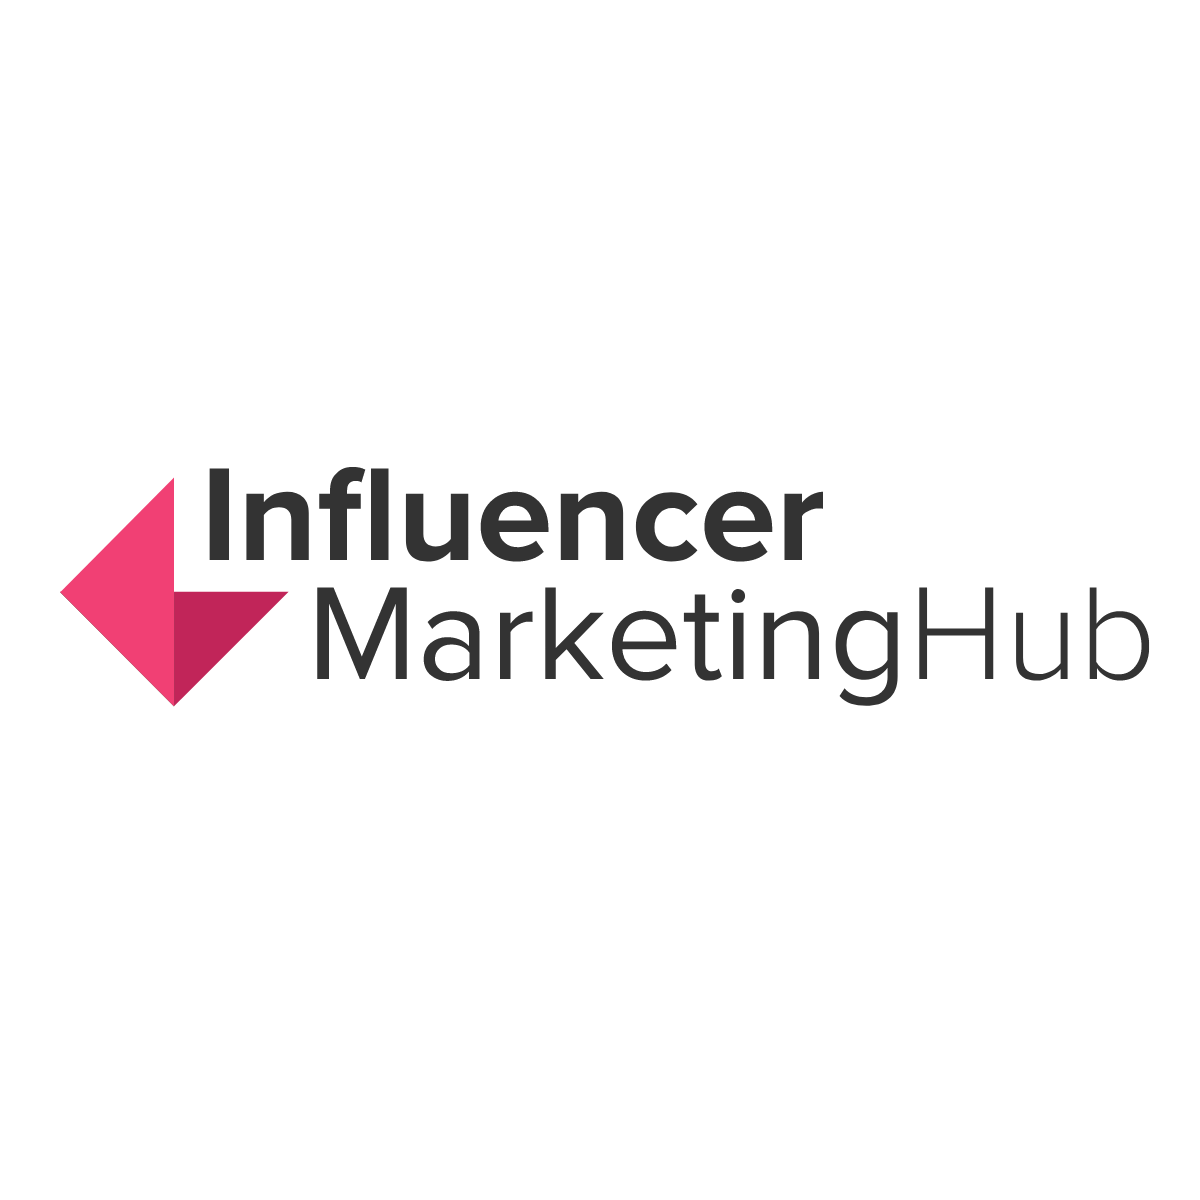 Influencer Marketing Hub Connect - December 6, 2022